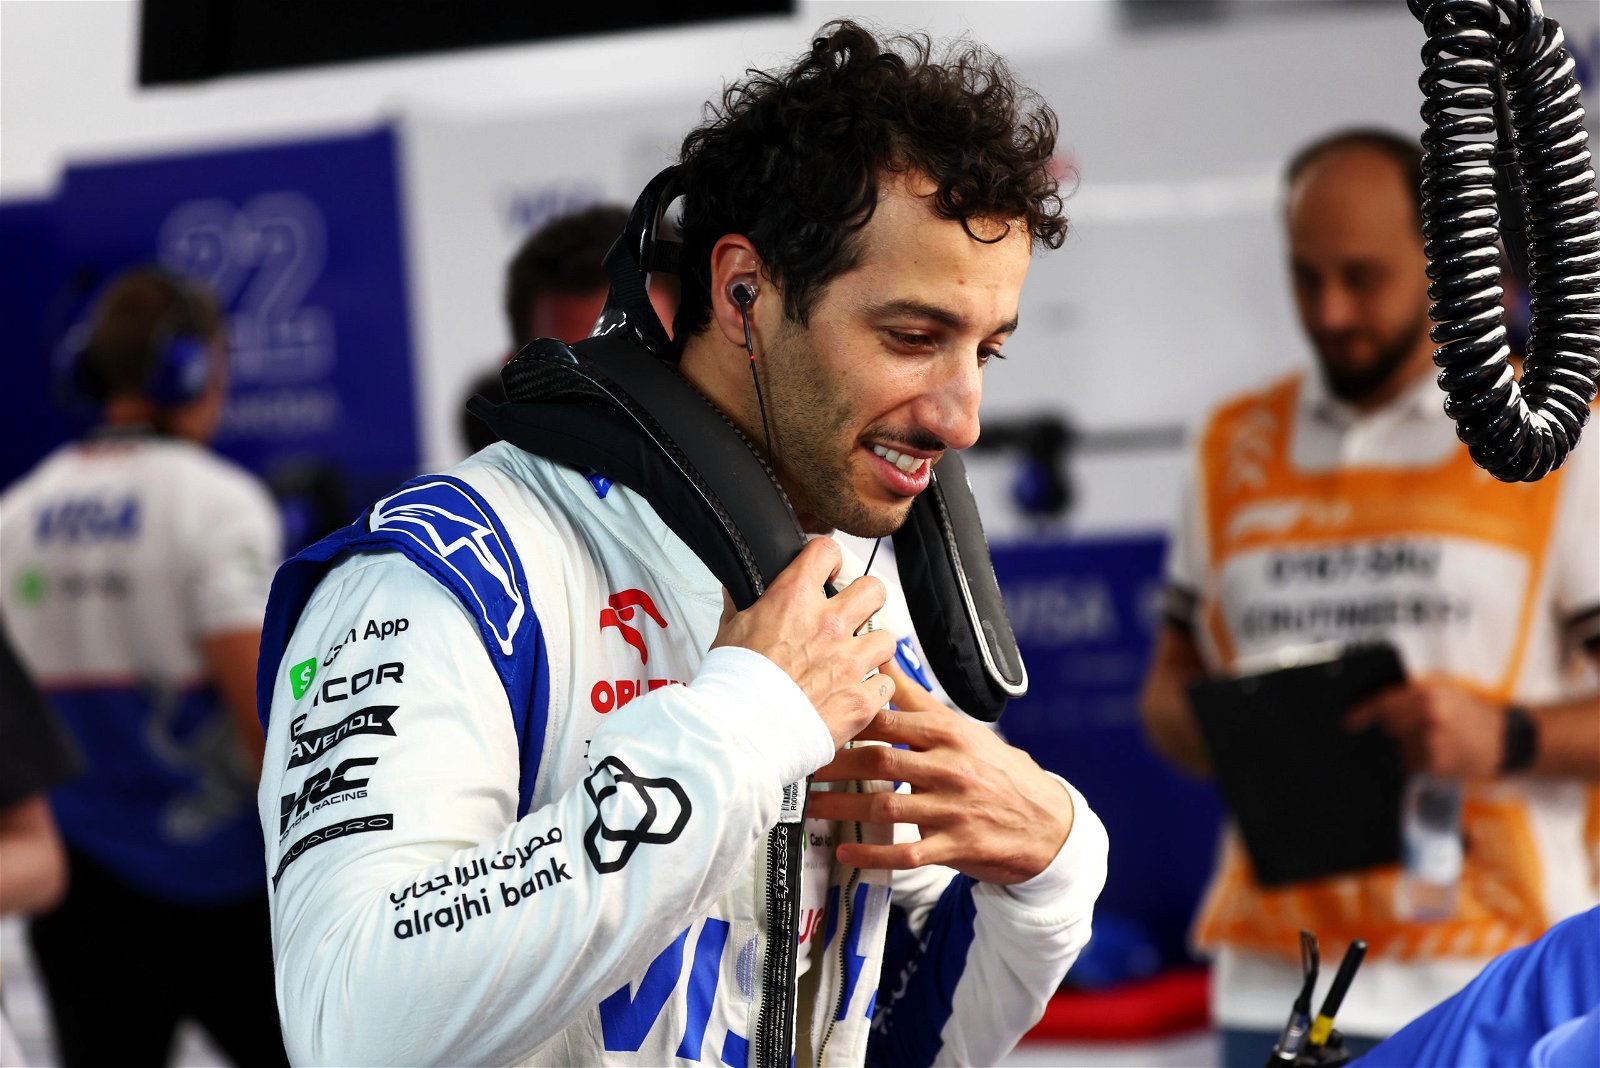 Ricciardo hopes car was damaged after frustrating qualifying ...